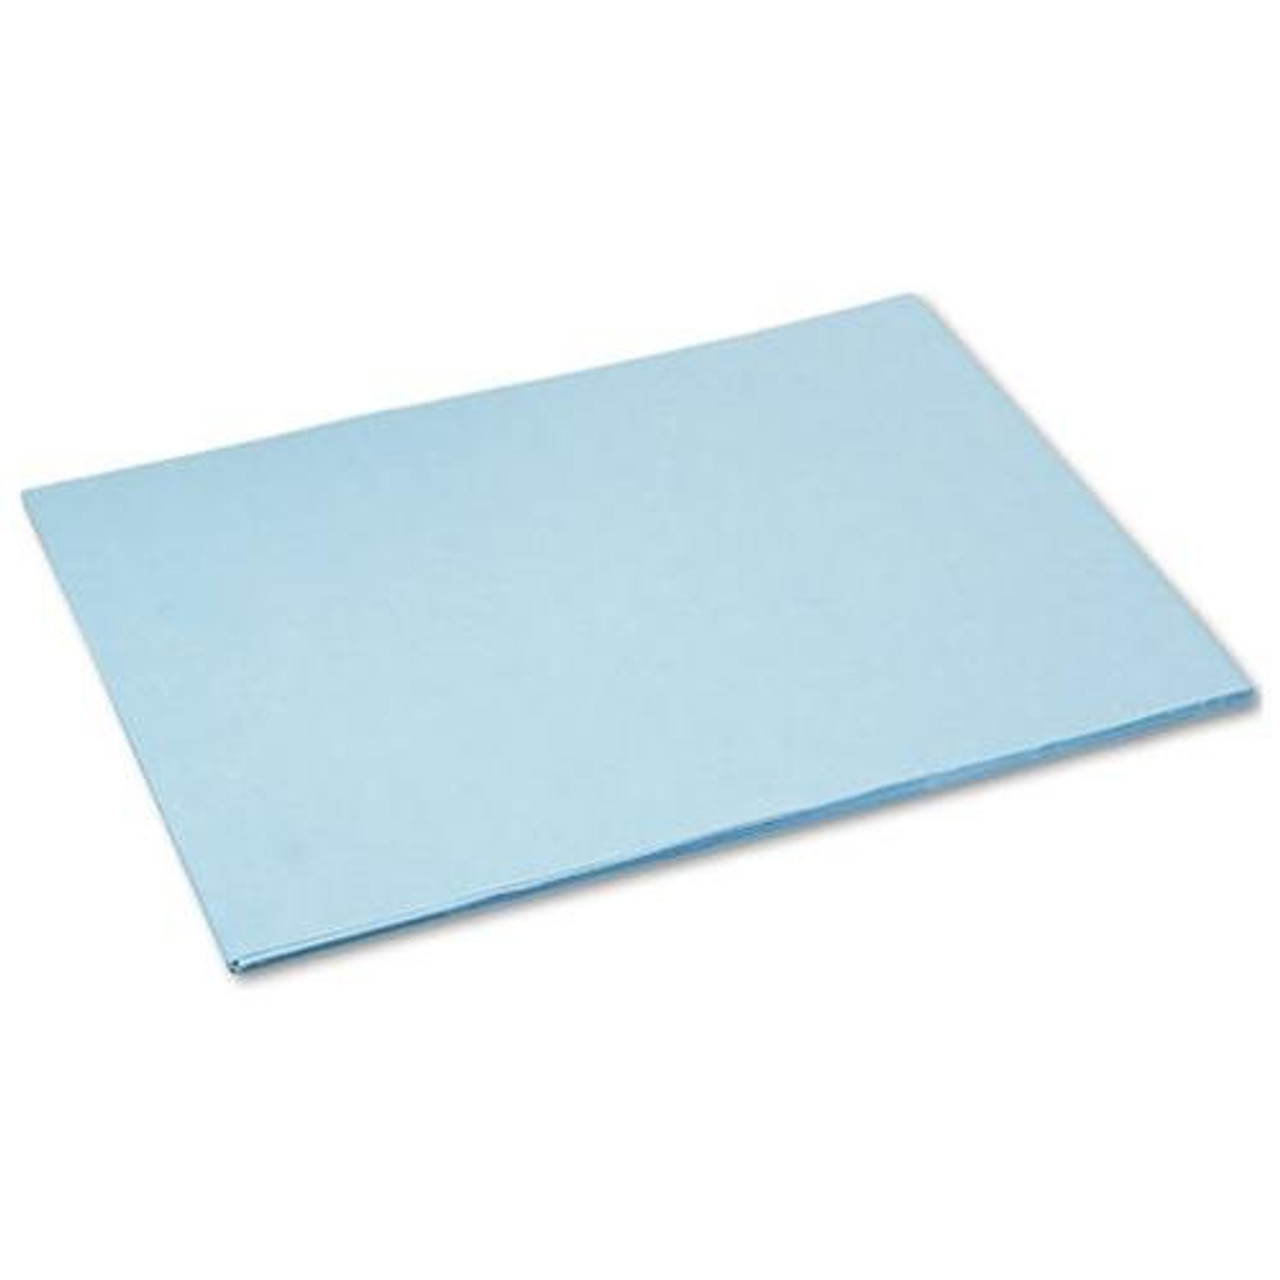 Construction Paper/Sky Blue